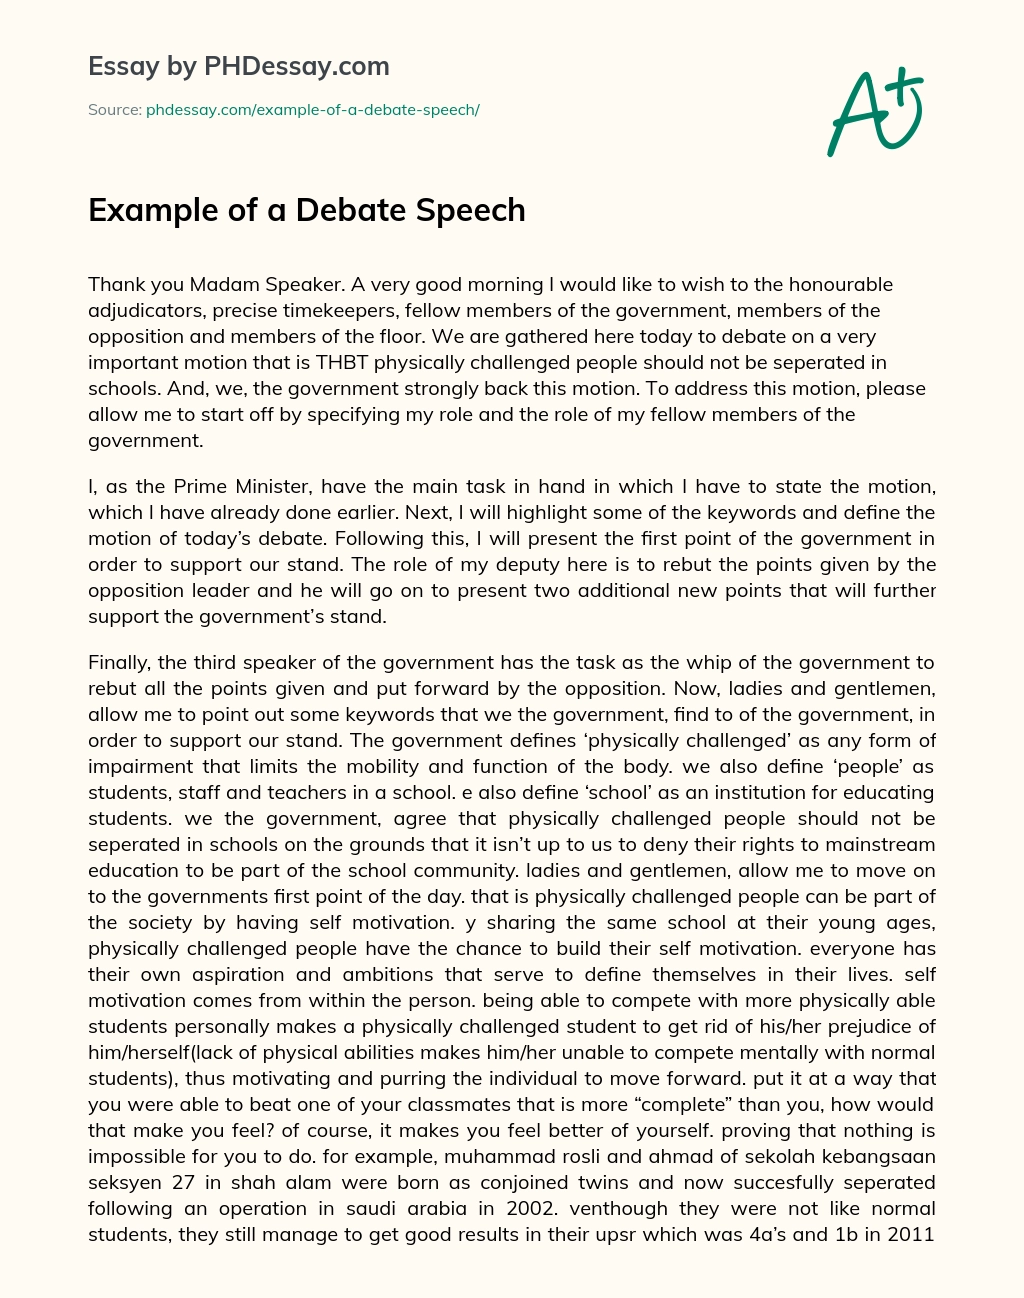 Example of a Debate Speech essay